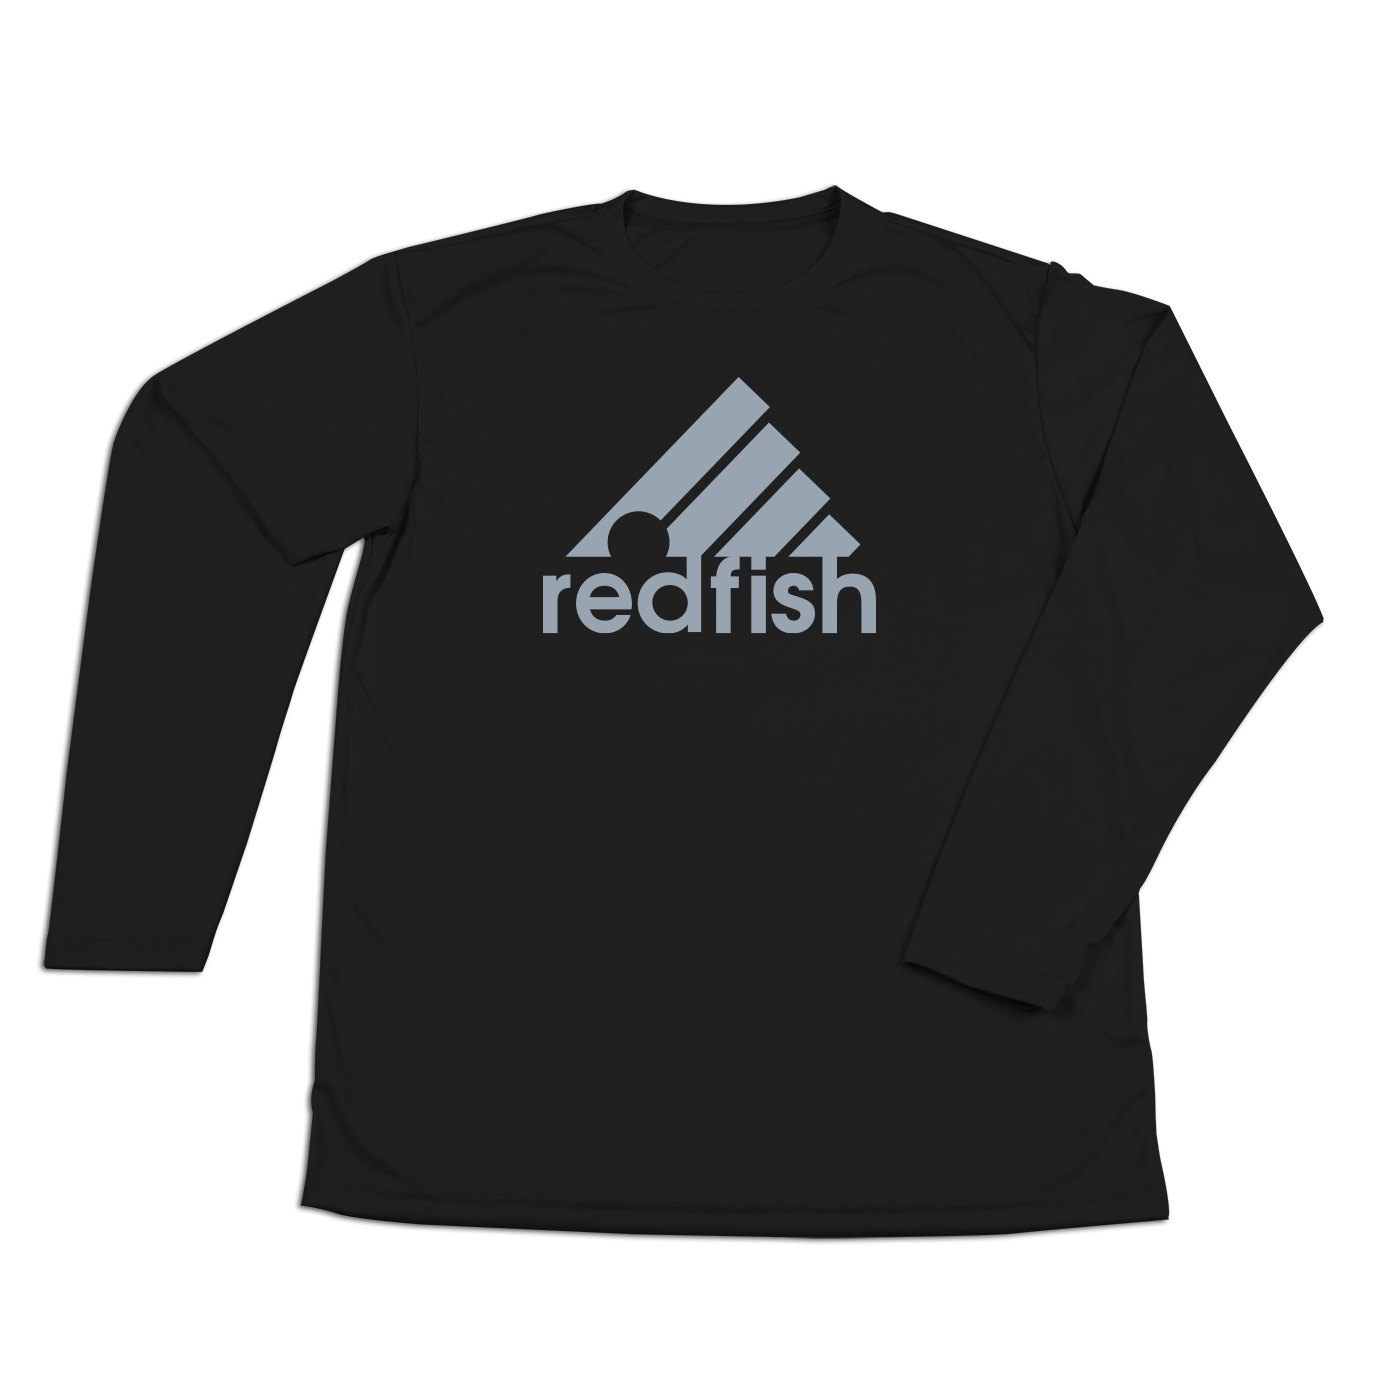 #REDFISH Performance Long Sleeve Shirt - Gray Print